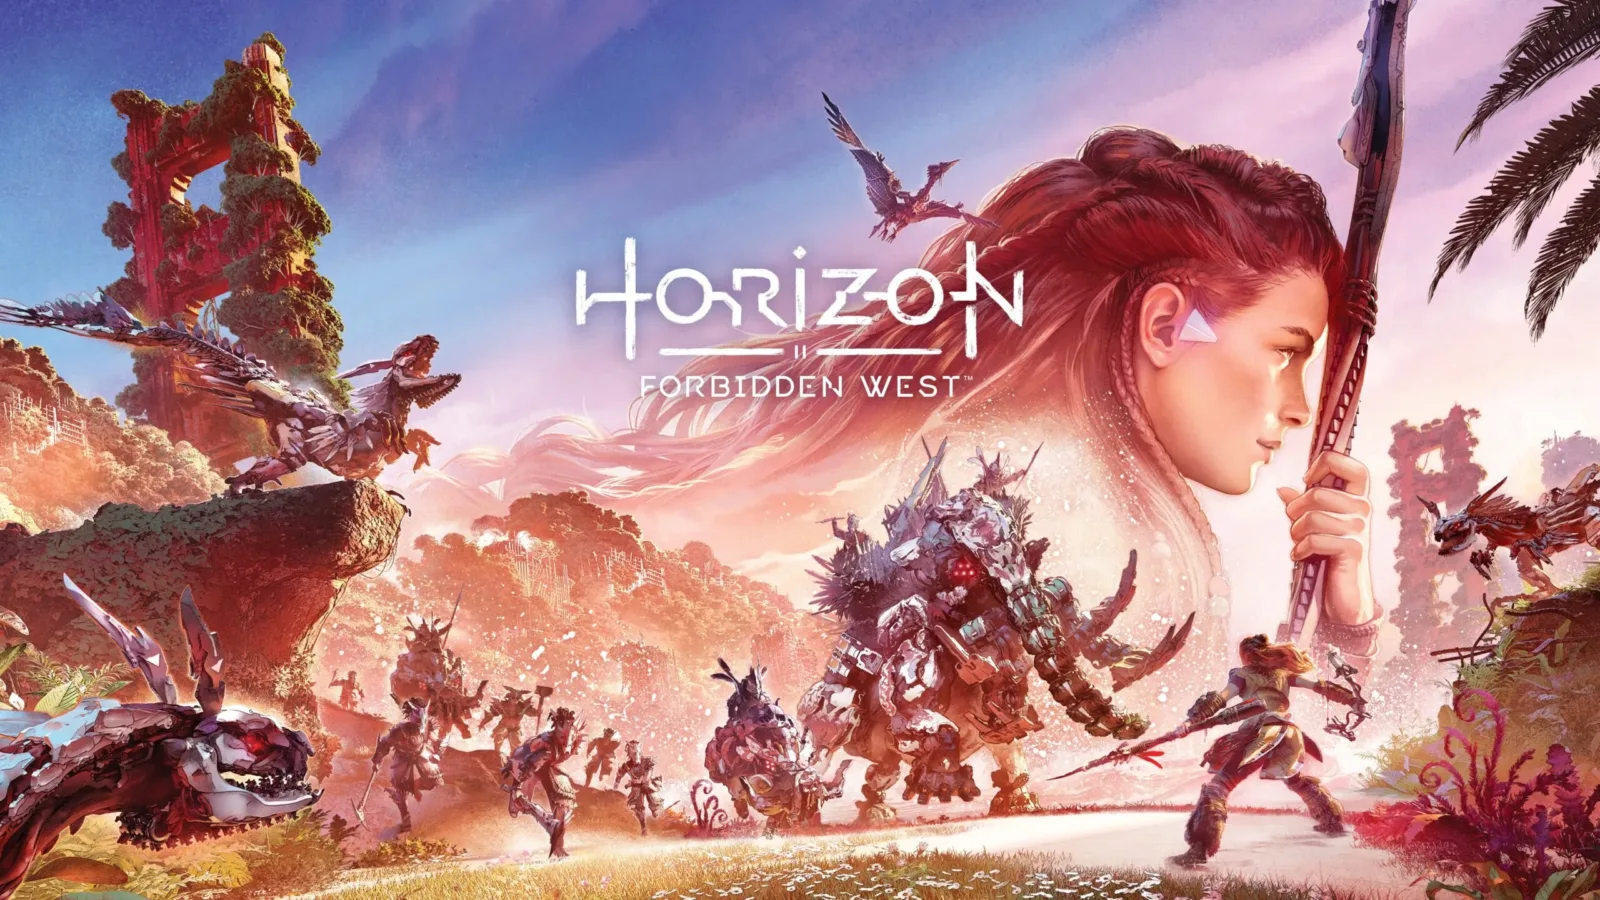 Horizon Forbidden West nova imagem promocional